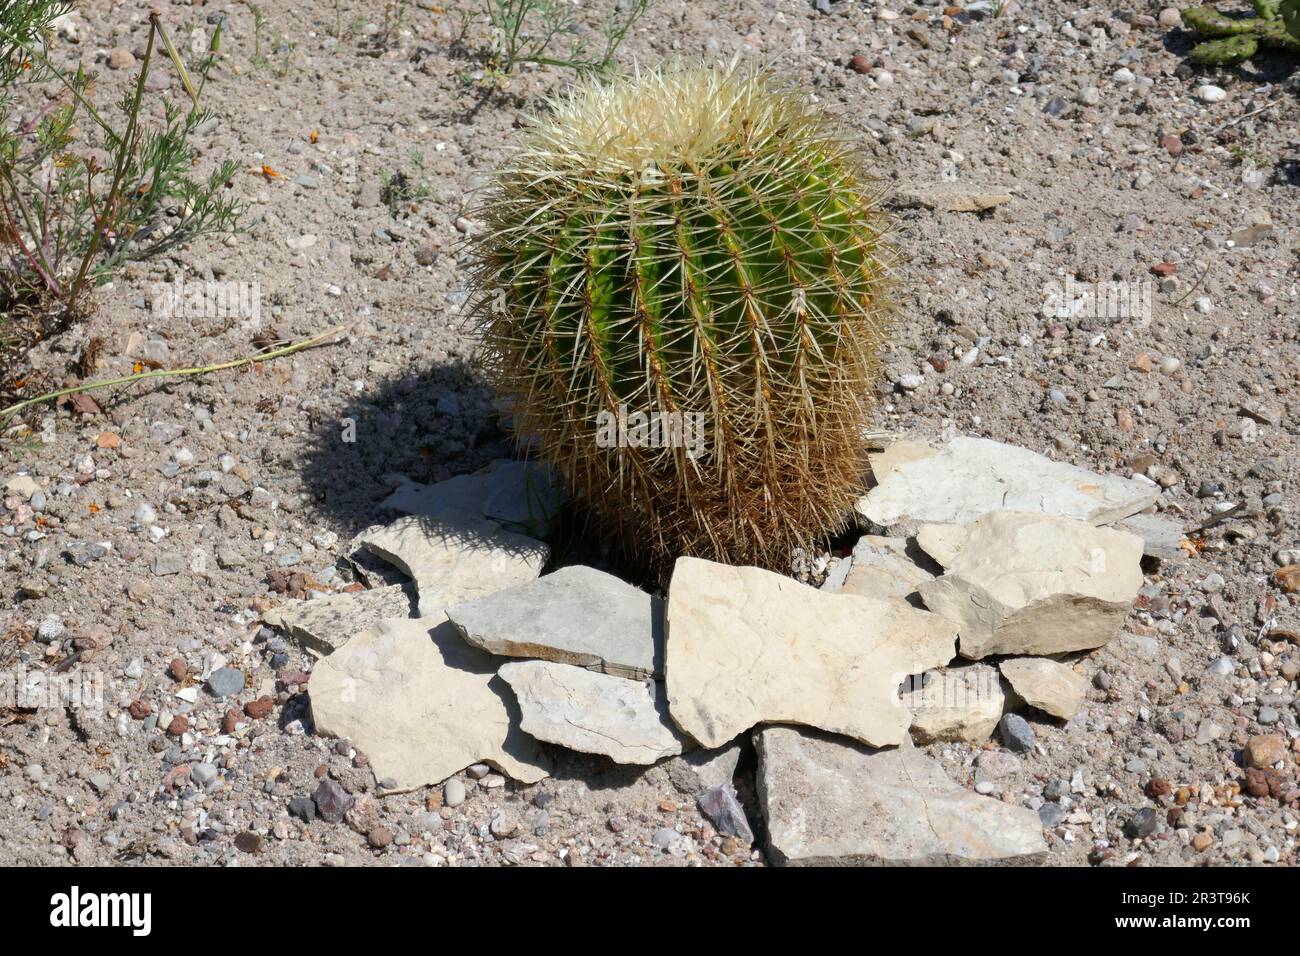 Gold ball cactus Stock Photo